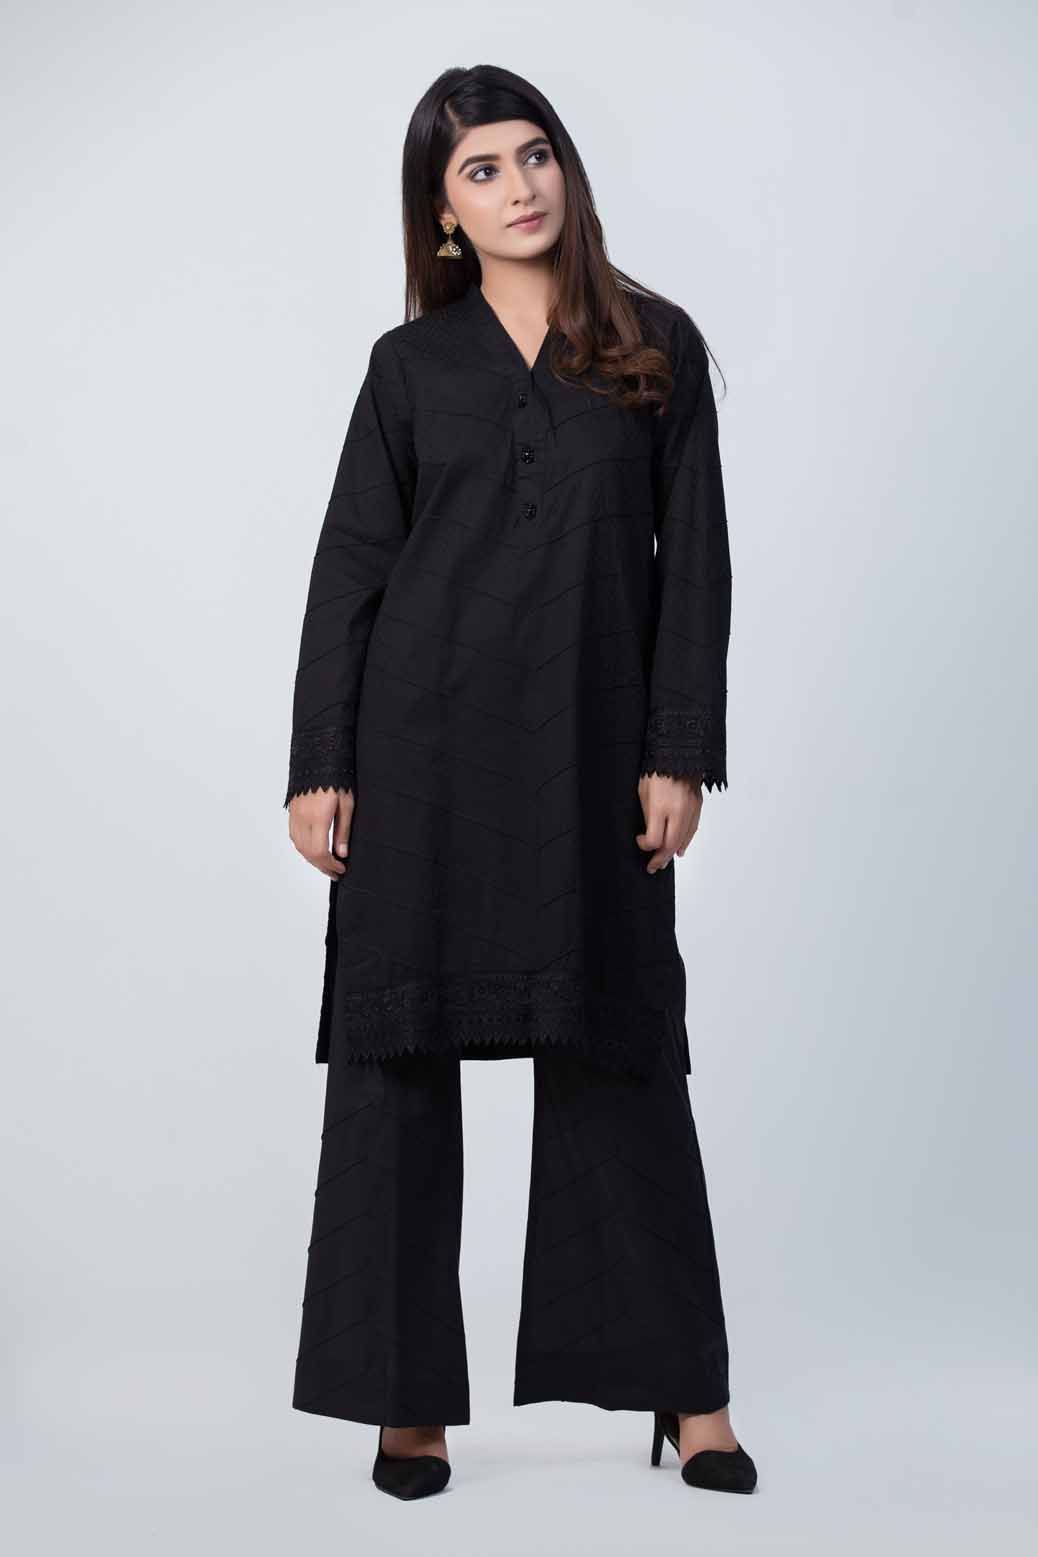 /2019/06/bonanza-satrangi-black-lawn-suit-wbn192p003-black-image1.jpeg